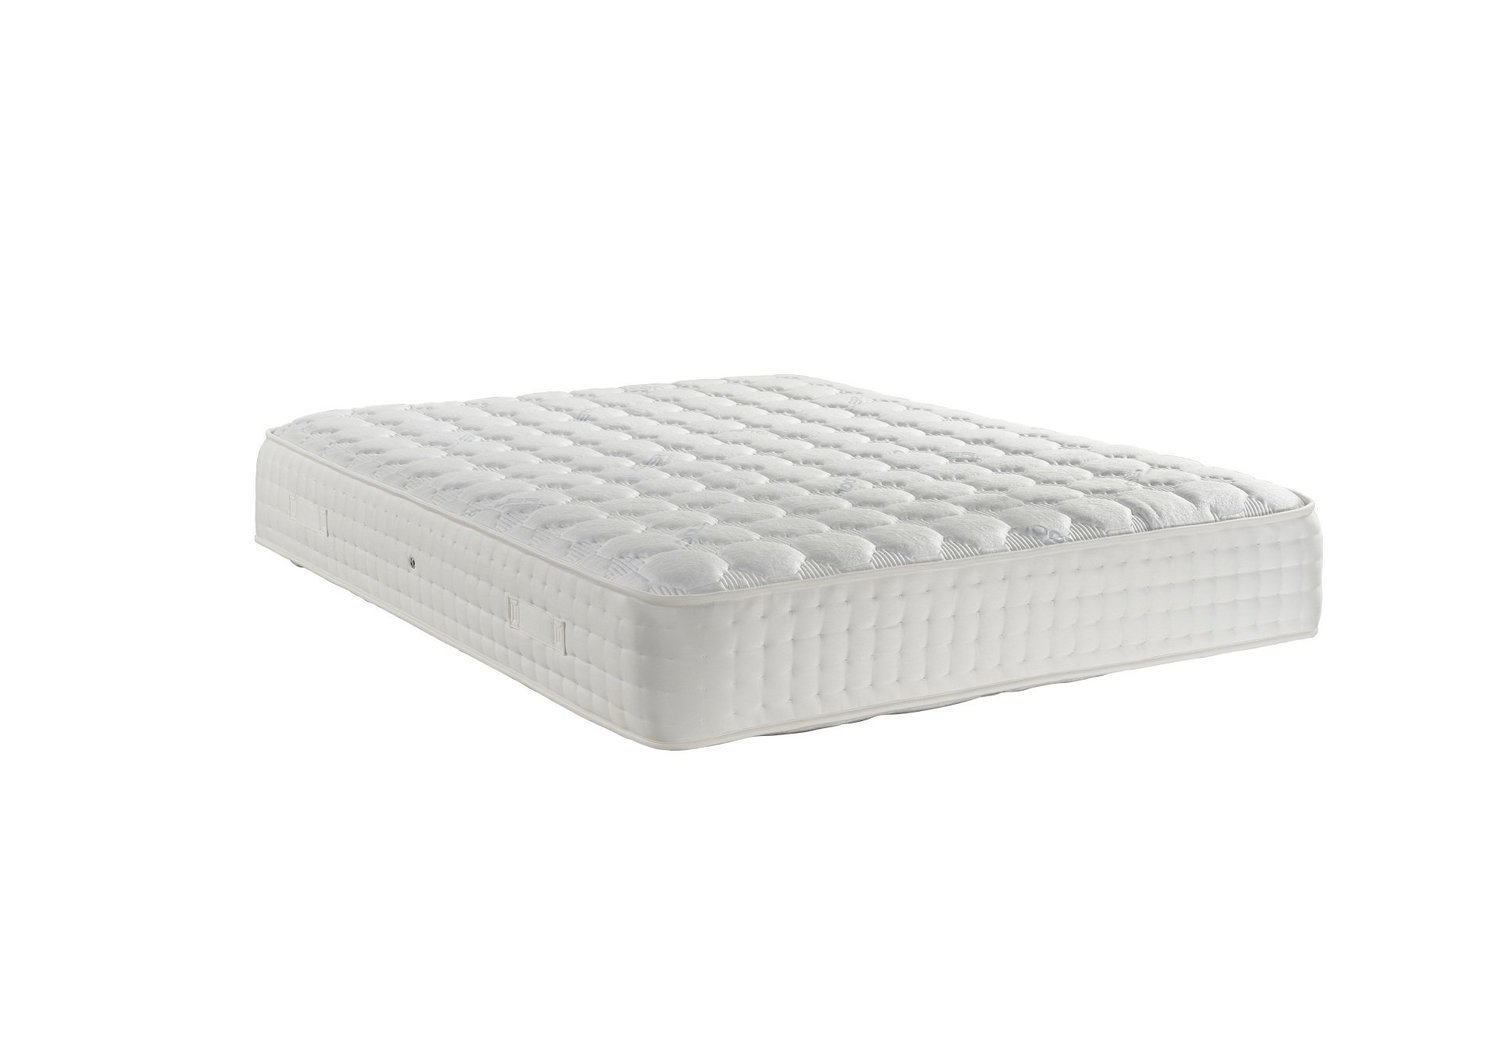 ice cold mattress pad